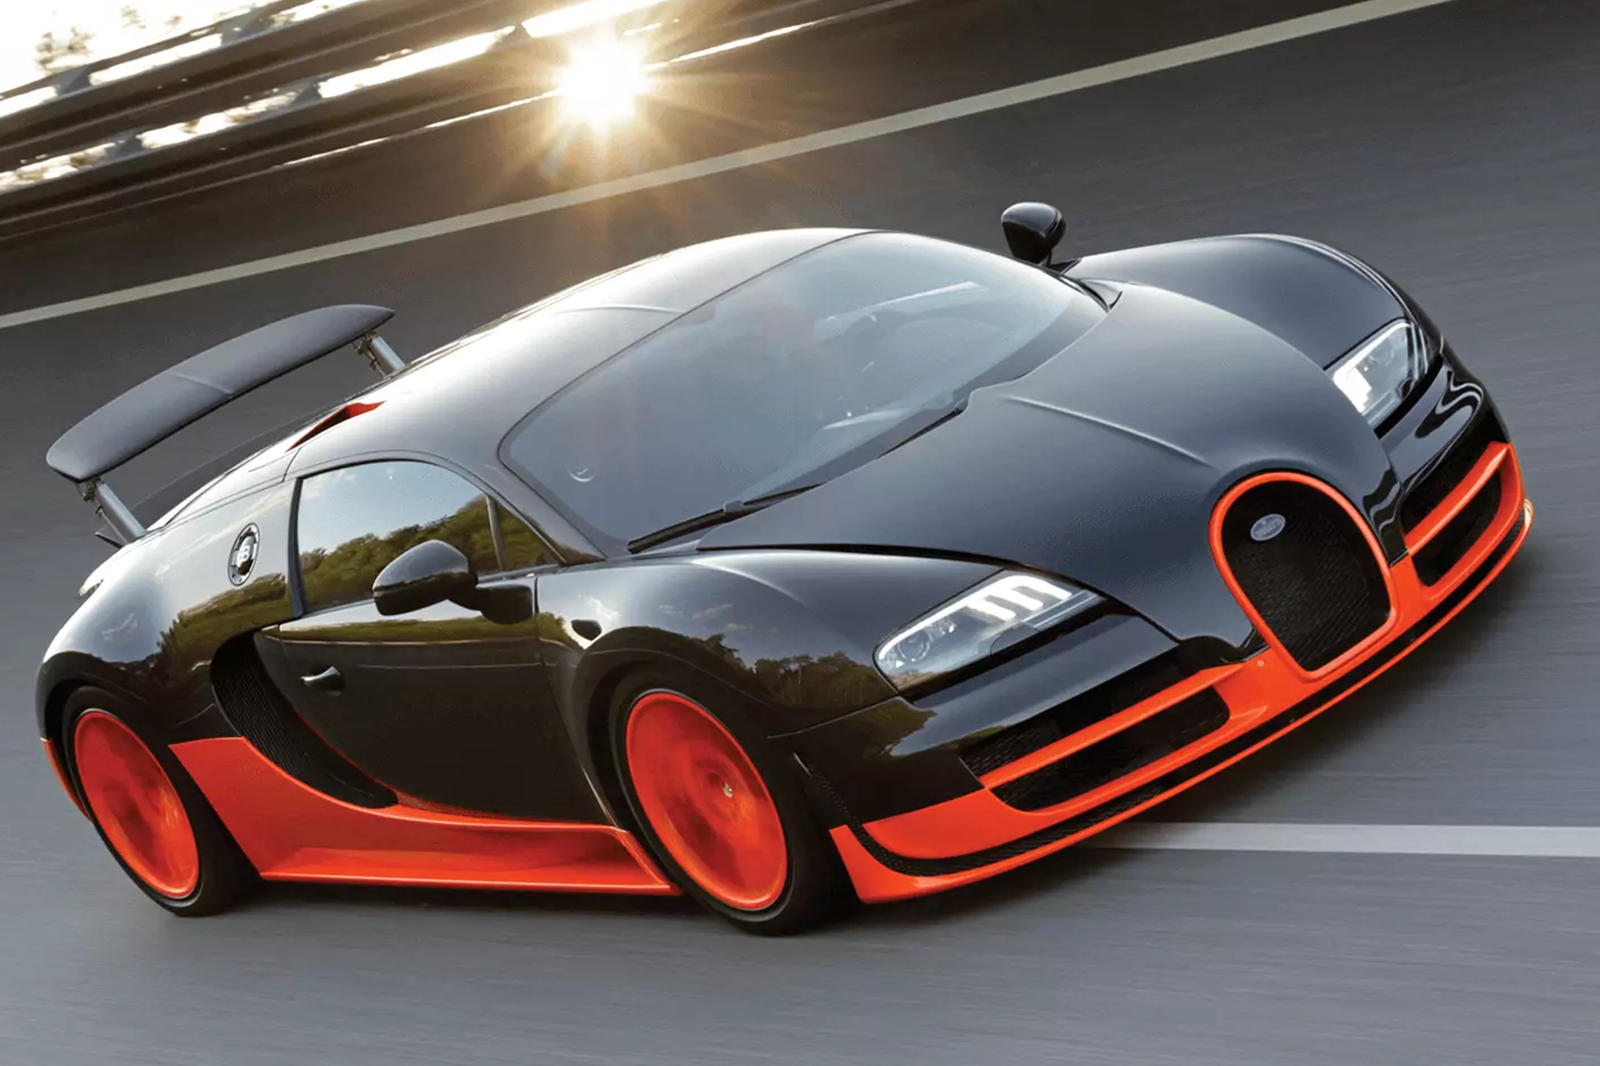 Bugatti Veyron Super Sport: Review, Trims, Specs, Price, New Interior